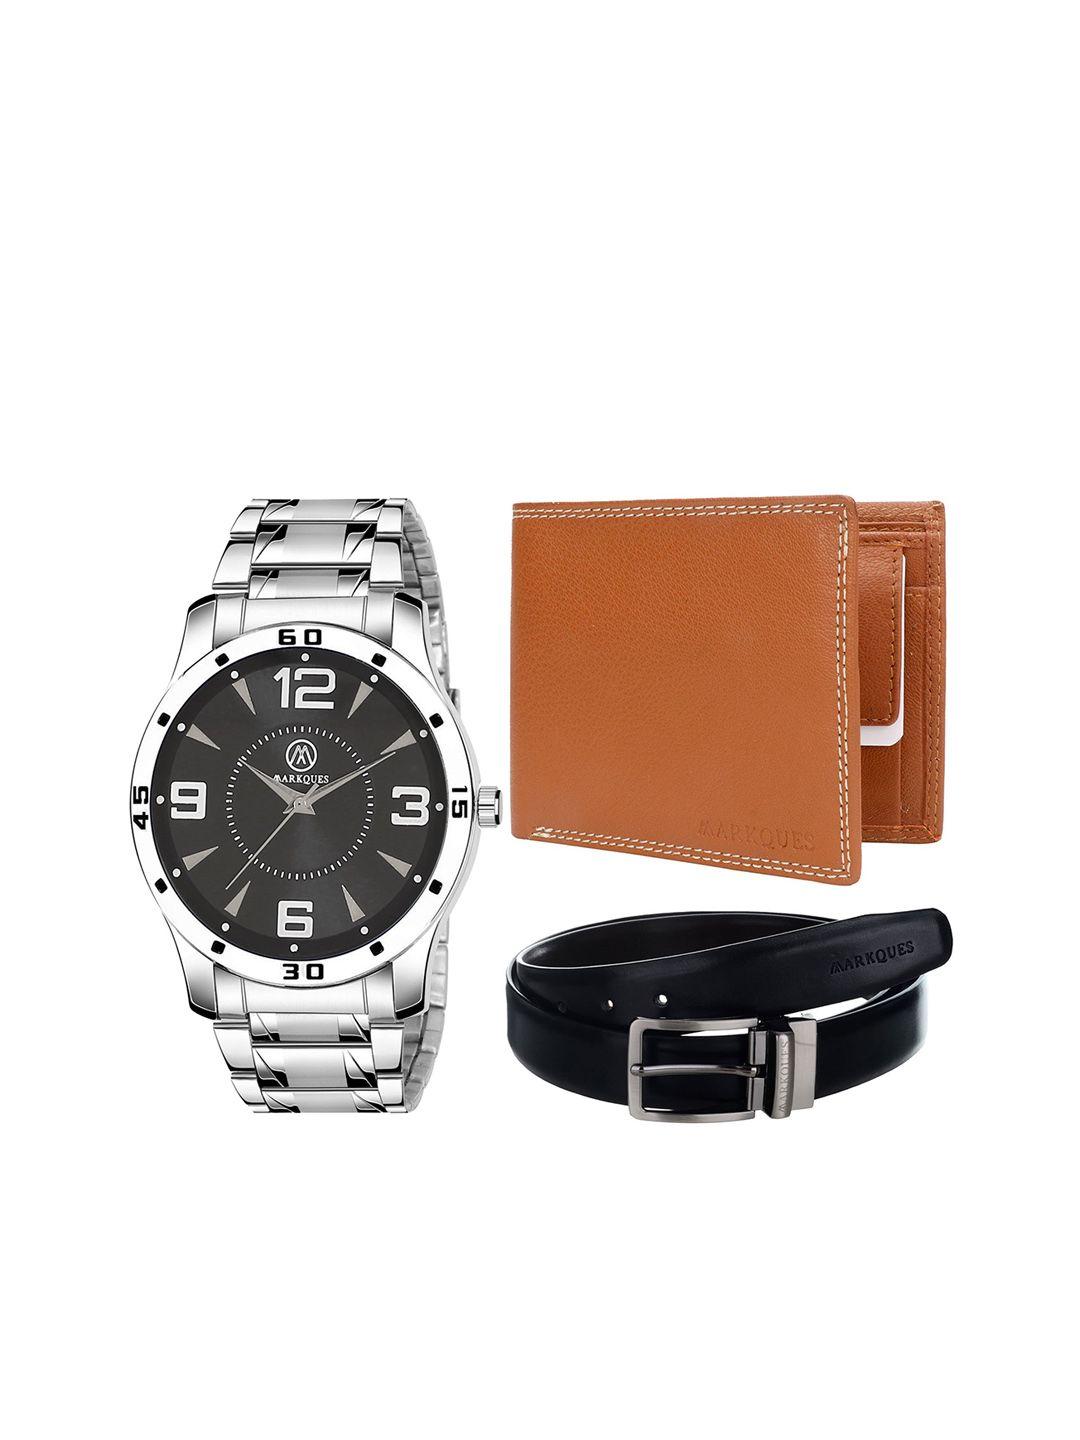 markques men tan ,black & sliver-toned watch, wallet and belt accessory gift set